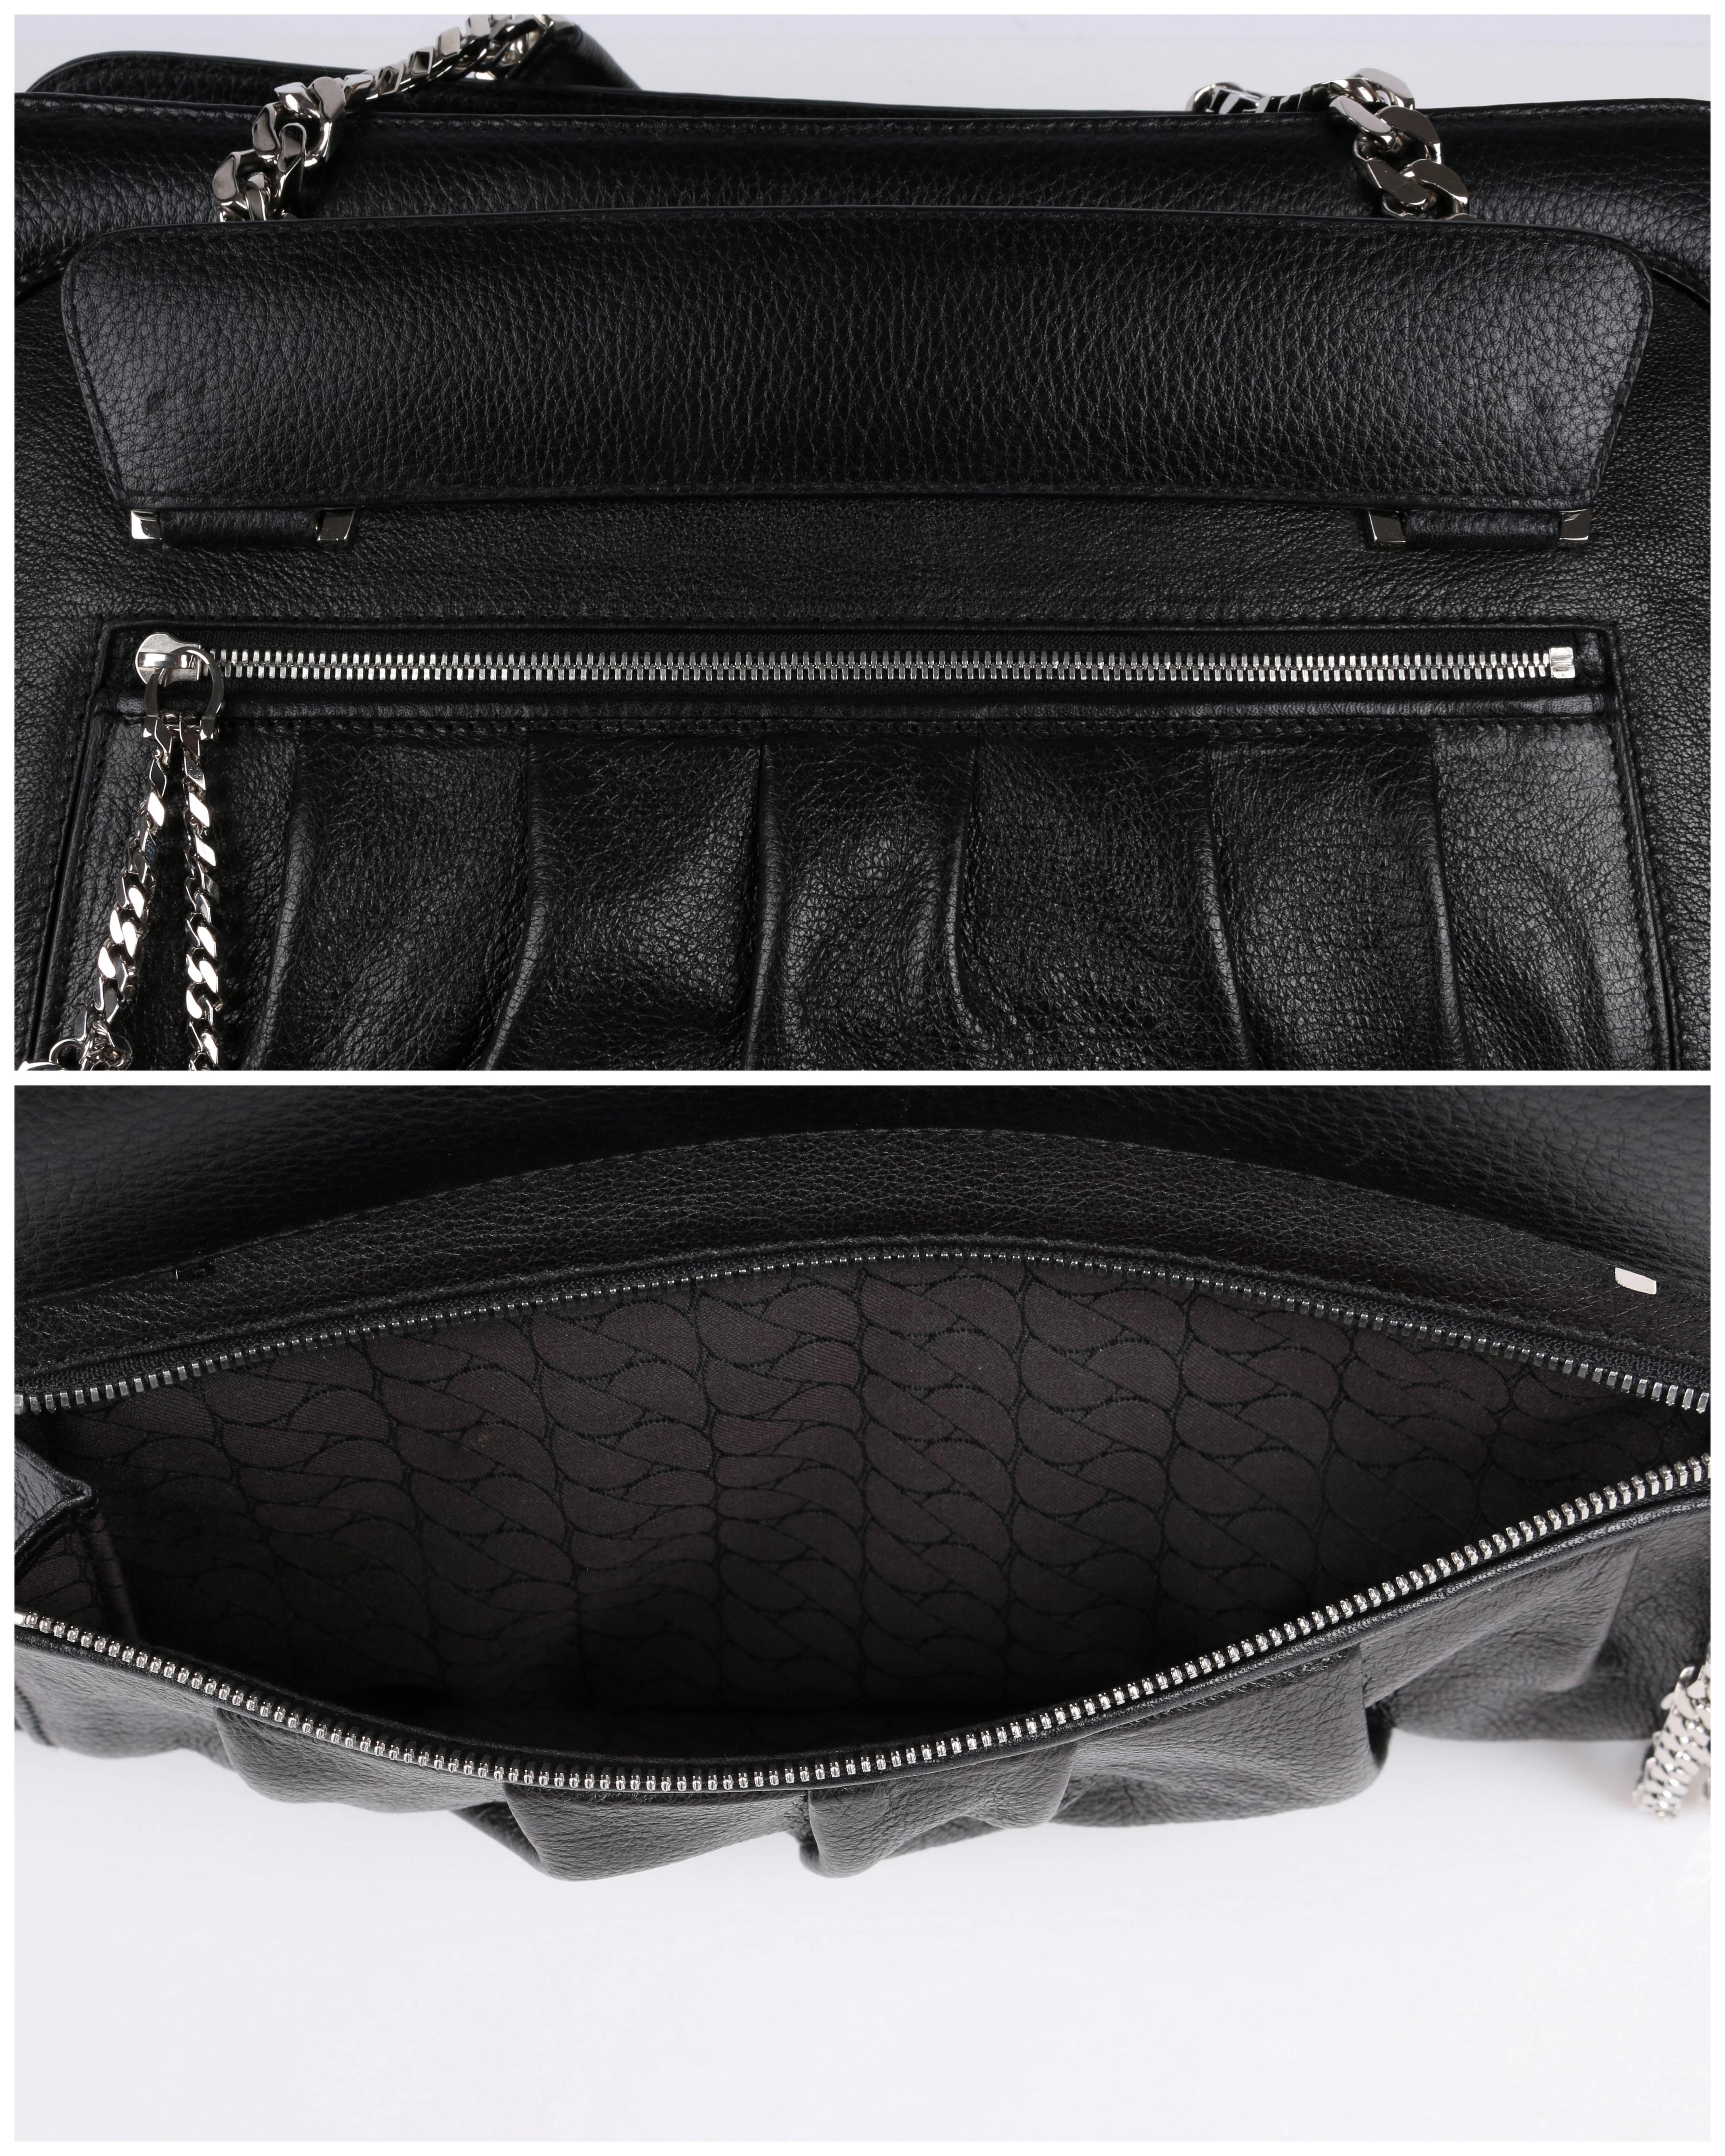 CARTIER Black Textured Leather La Dona Chain Link Satchel Bag Handbag Purse 5